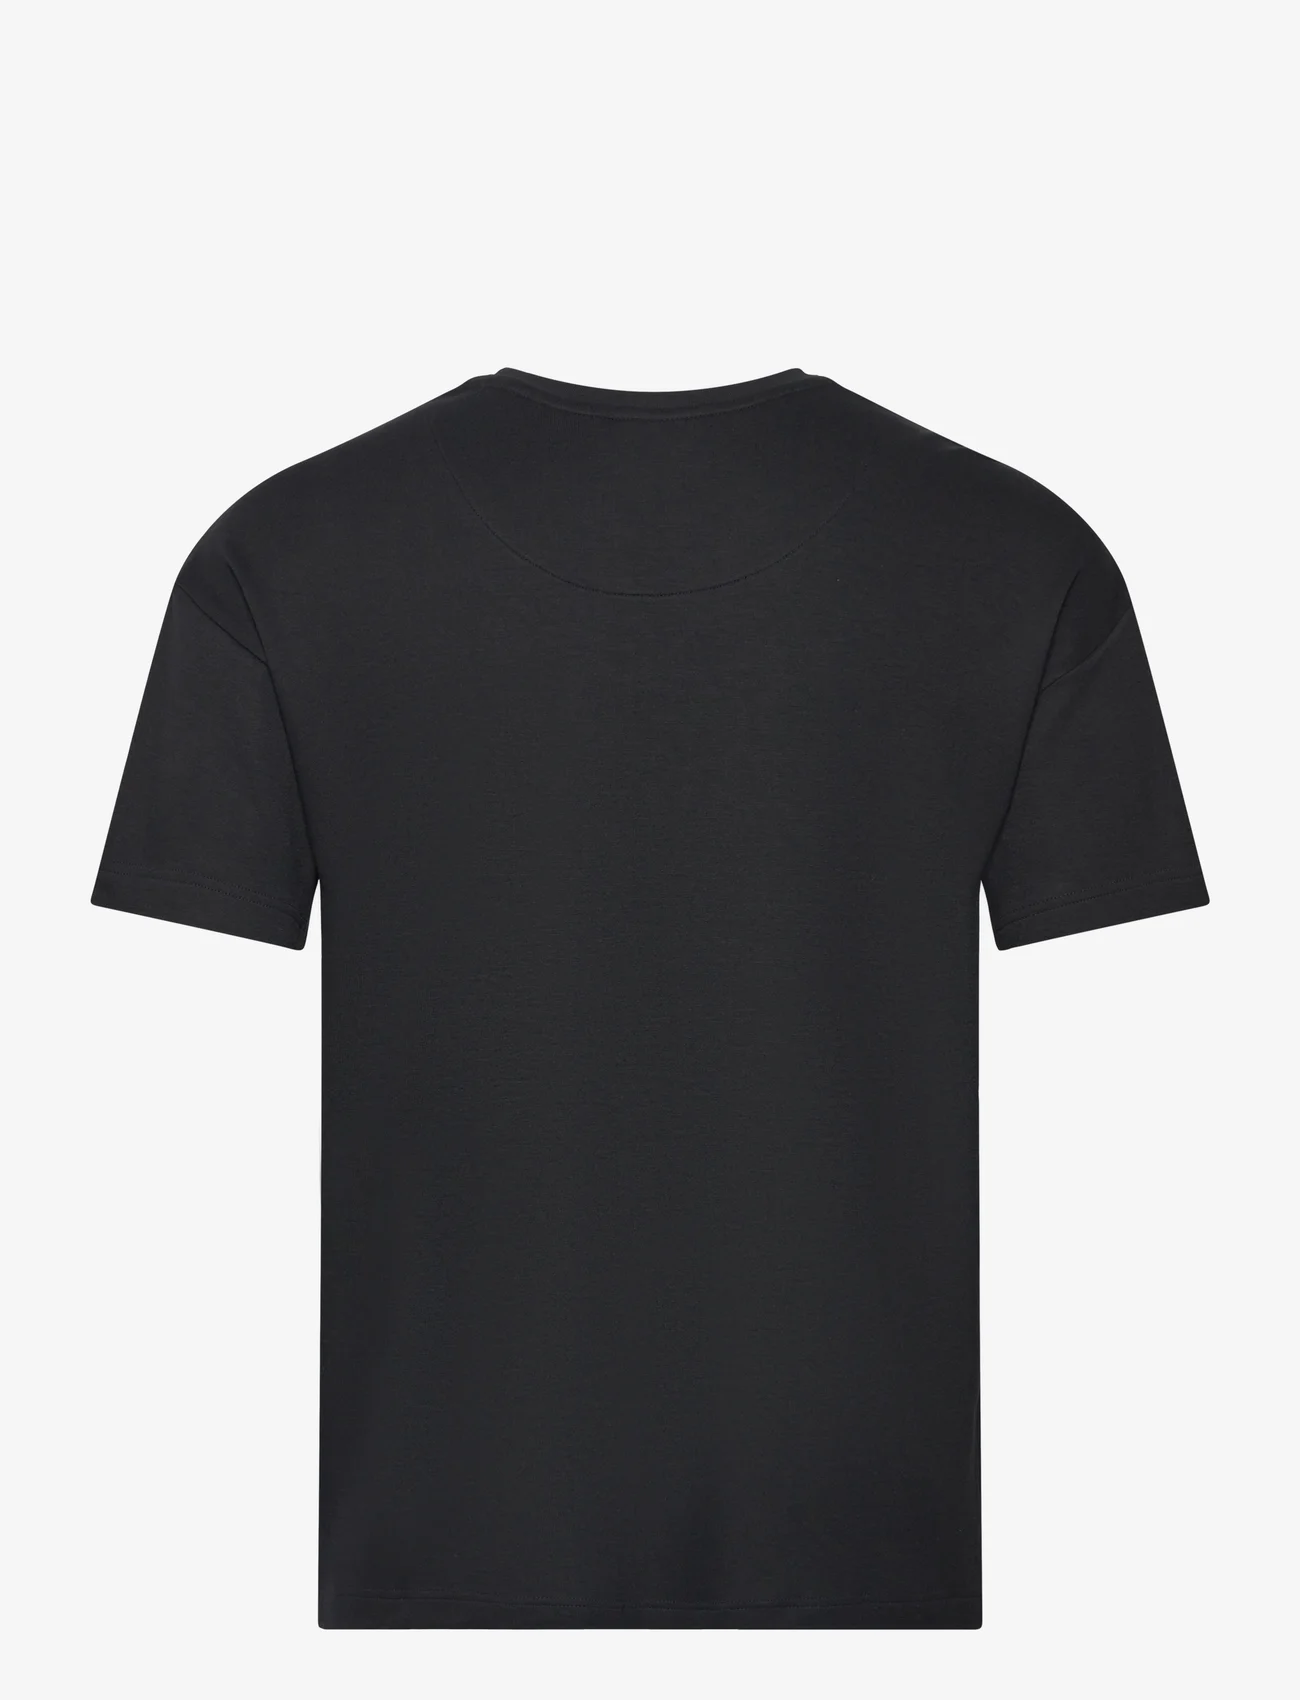 HUGO - Camo T-Shirt - kortärmade t-shirts - black - 1